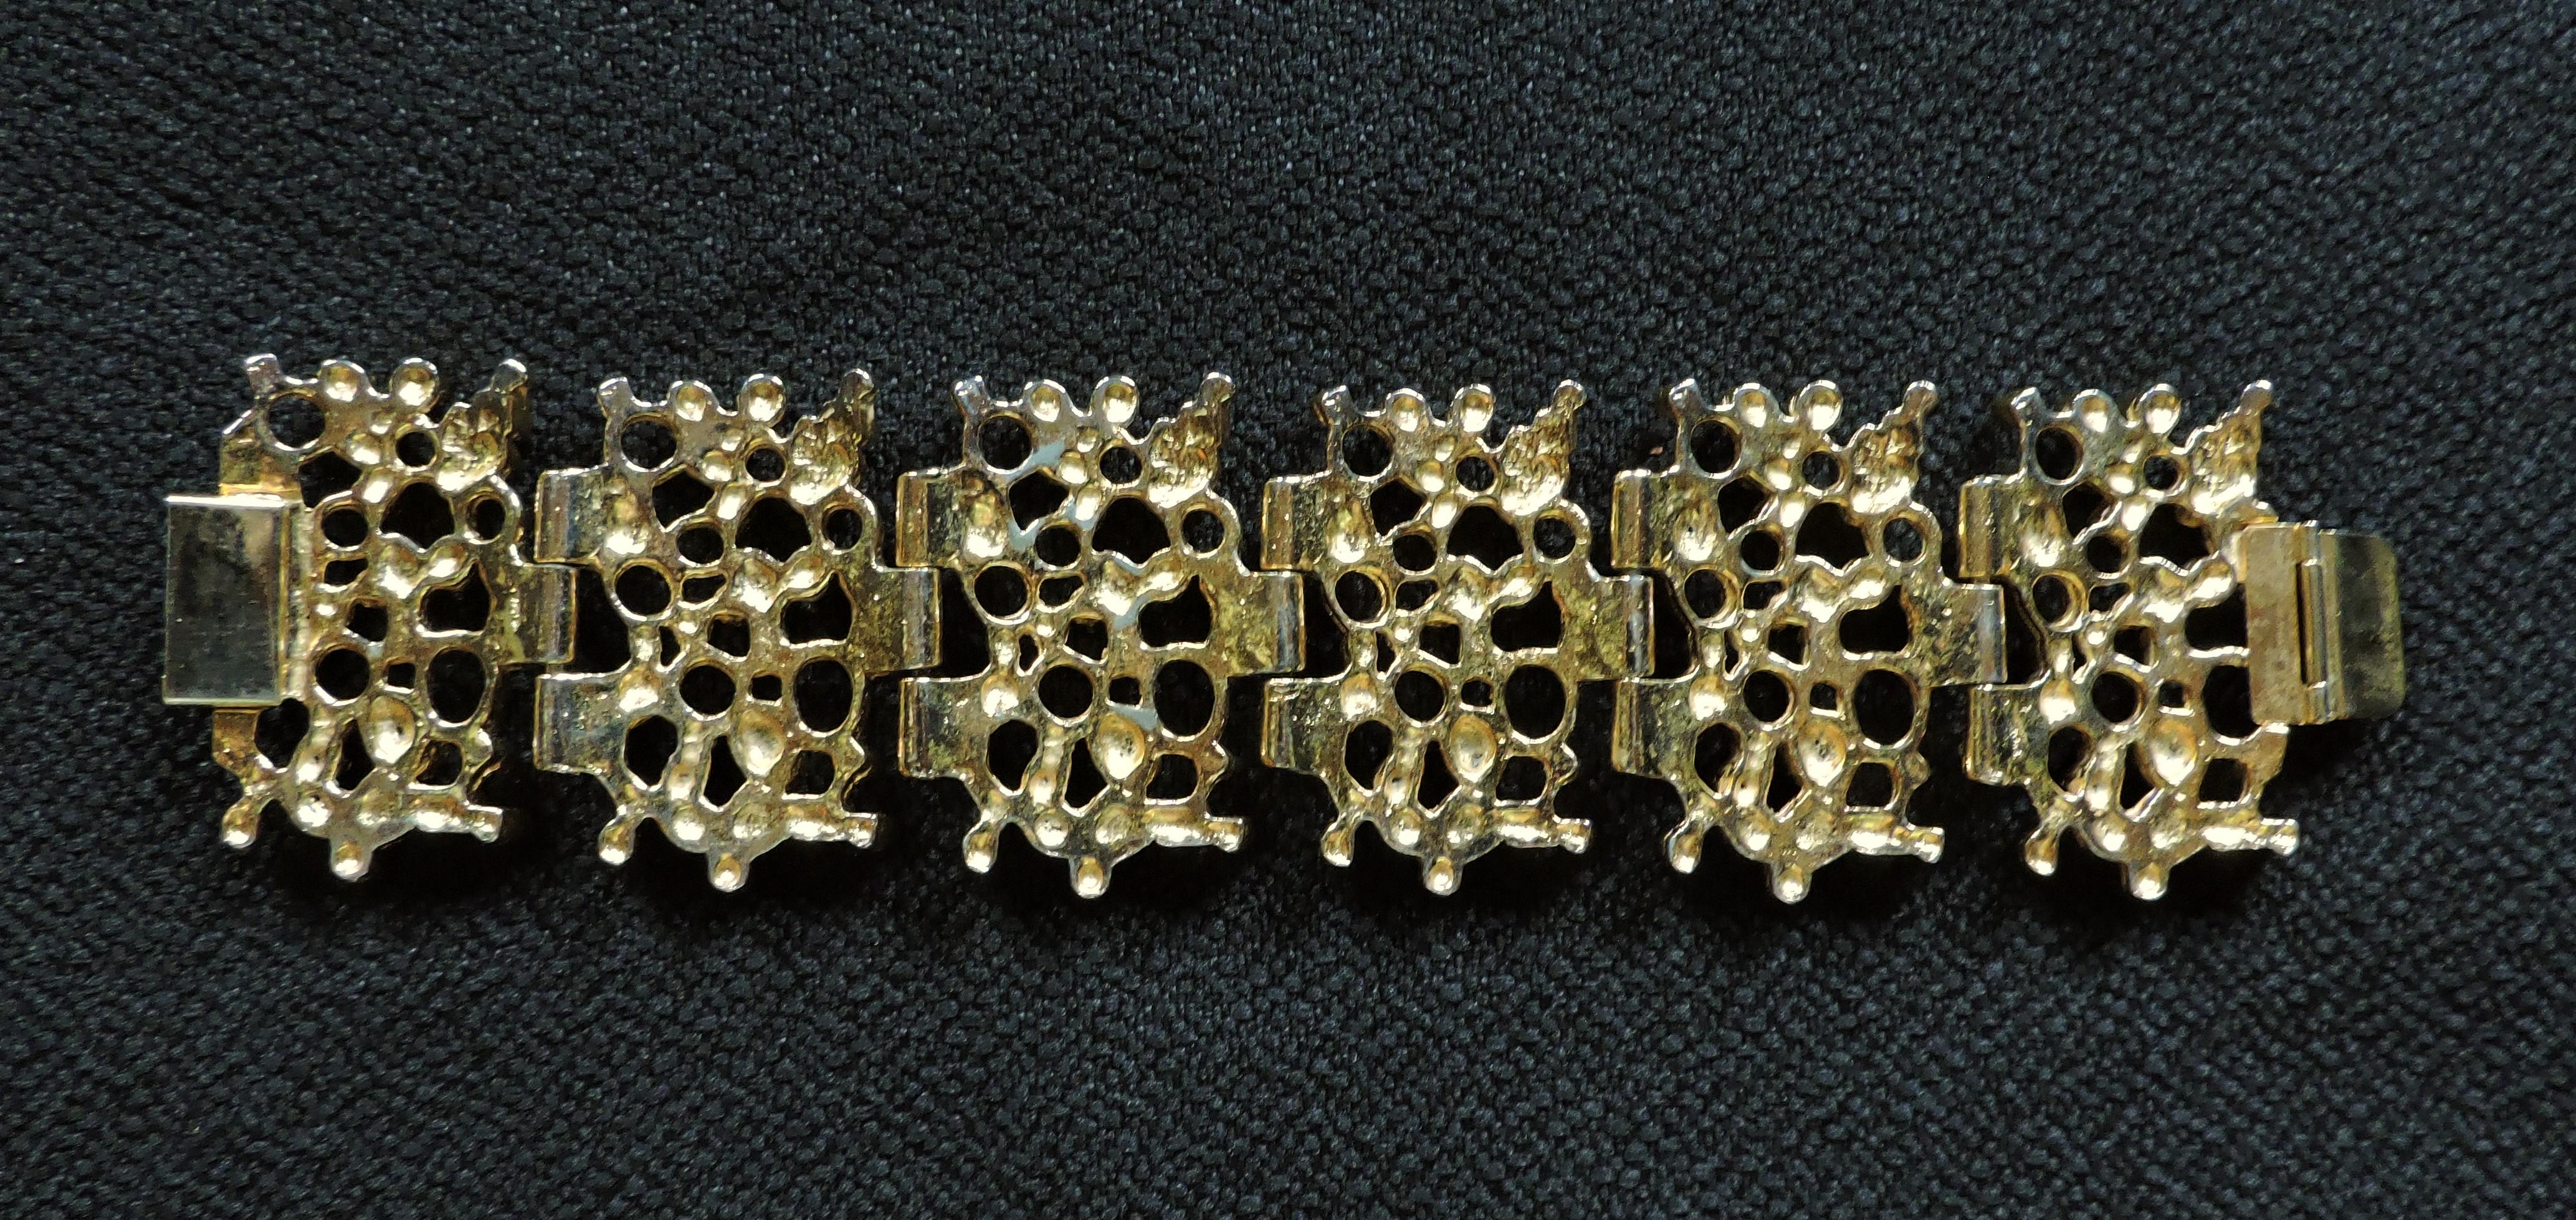 Plated Robert Larin Brutalist Modernist Sculptural Bracelet, Canadian Art Jewelry